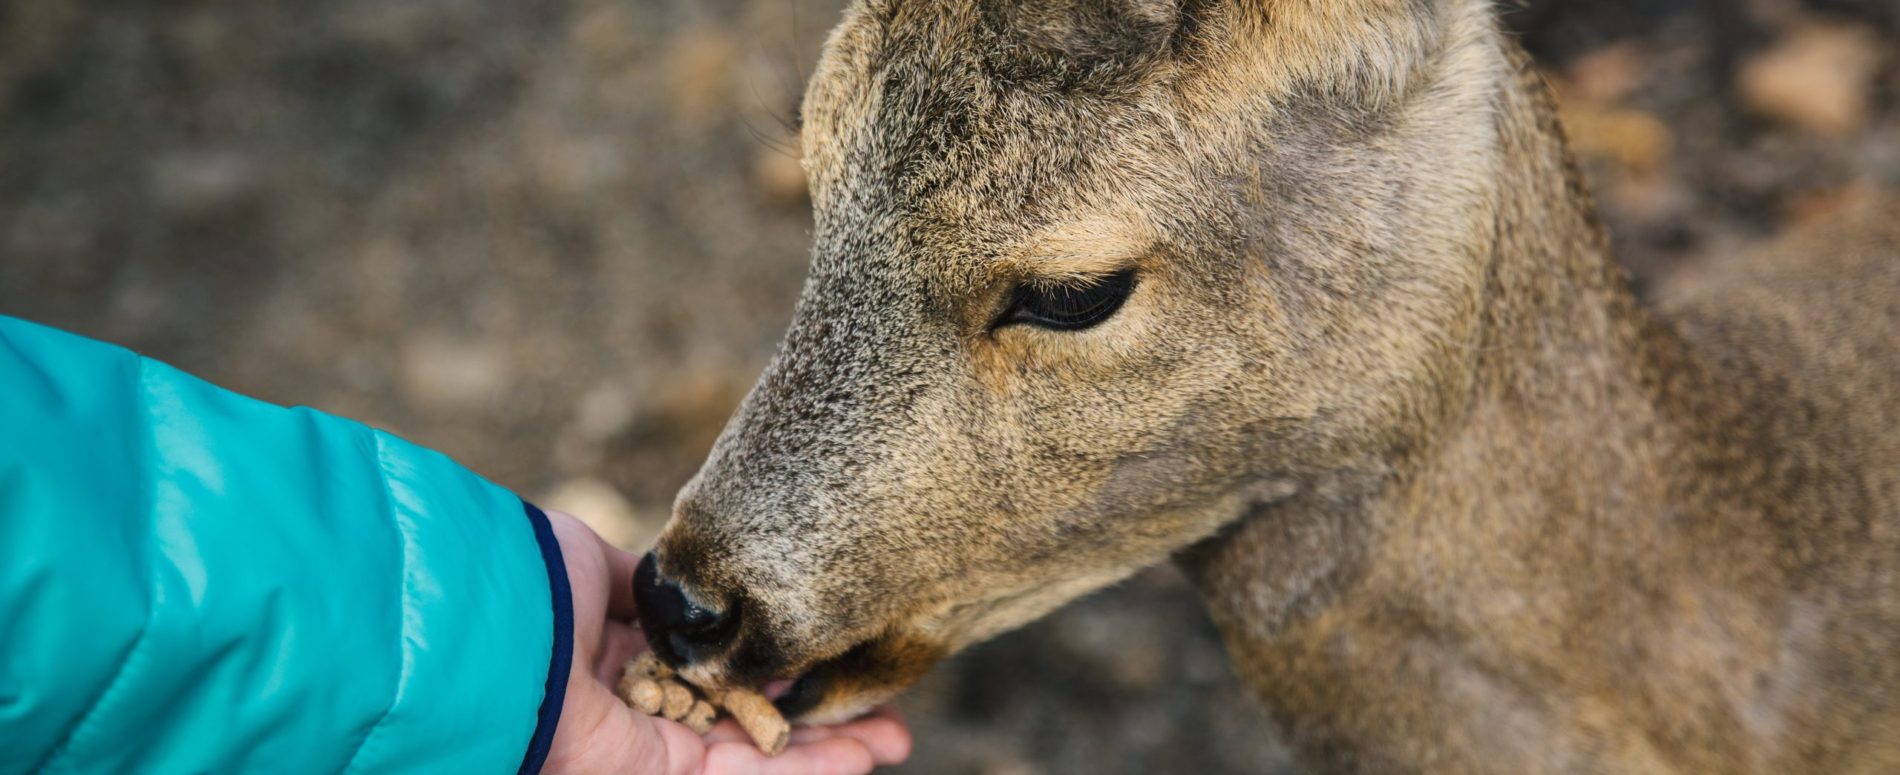 Girl's hand feeding a young roe deer